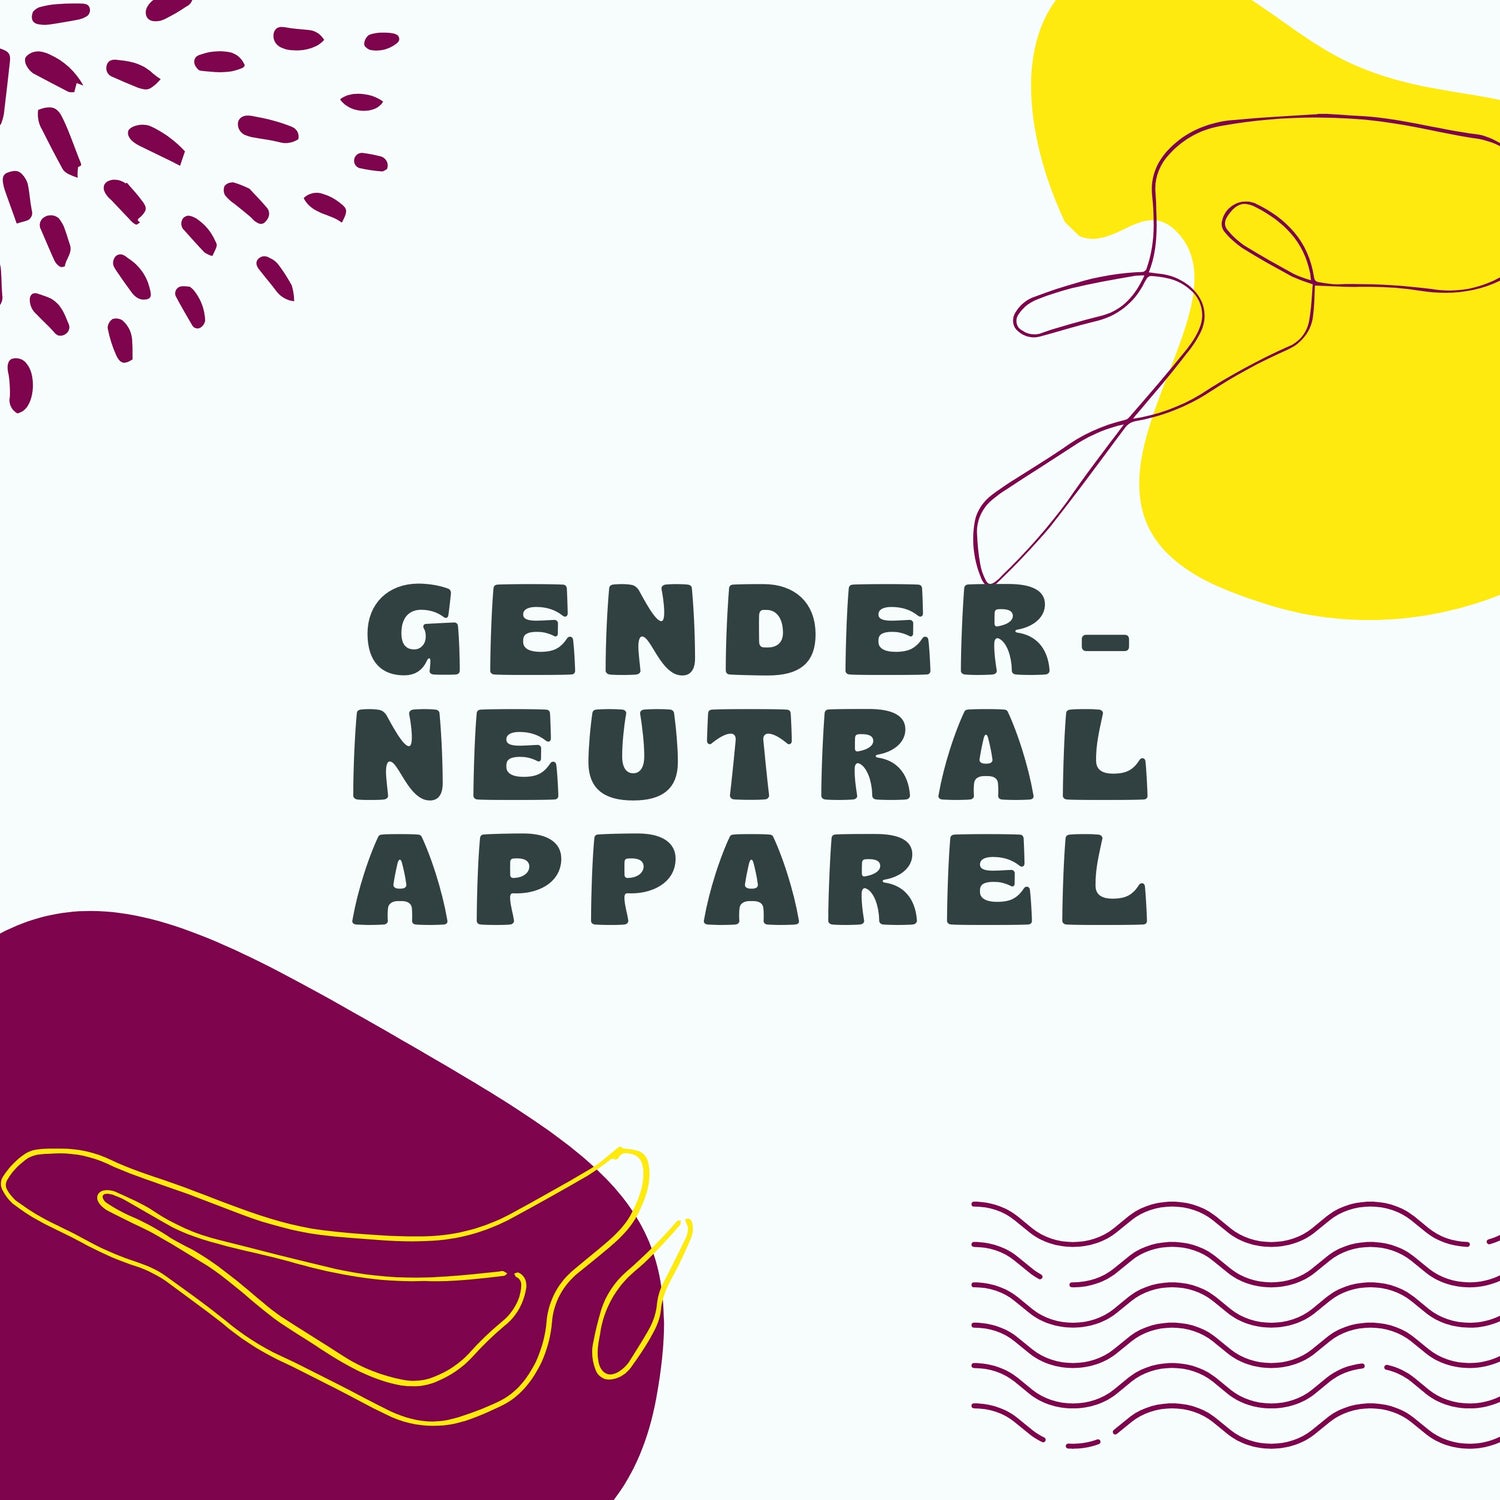 Gender-neutral Apparel